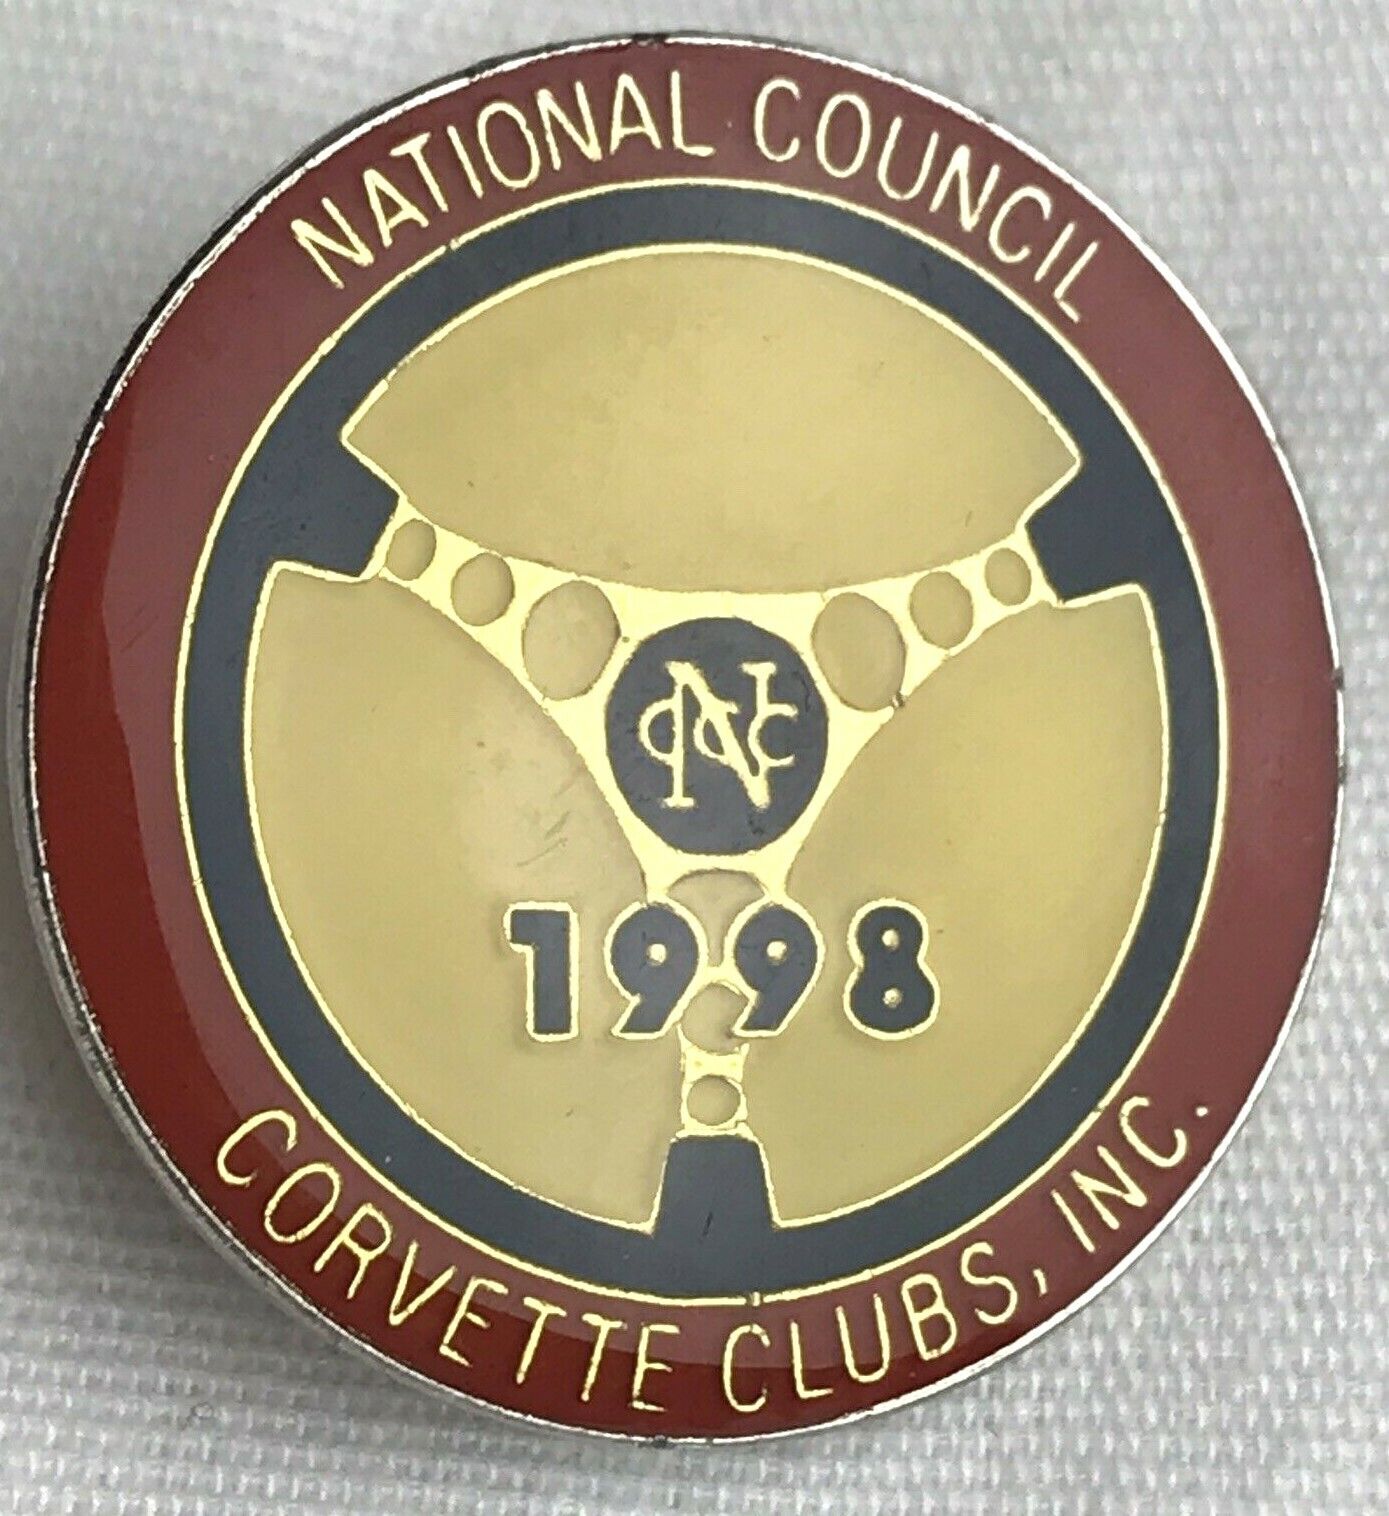 Corvette Club 1998 National Council Pin Gold Tone Enamel